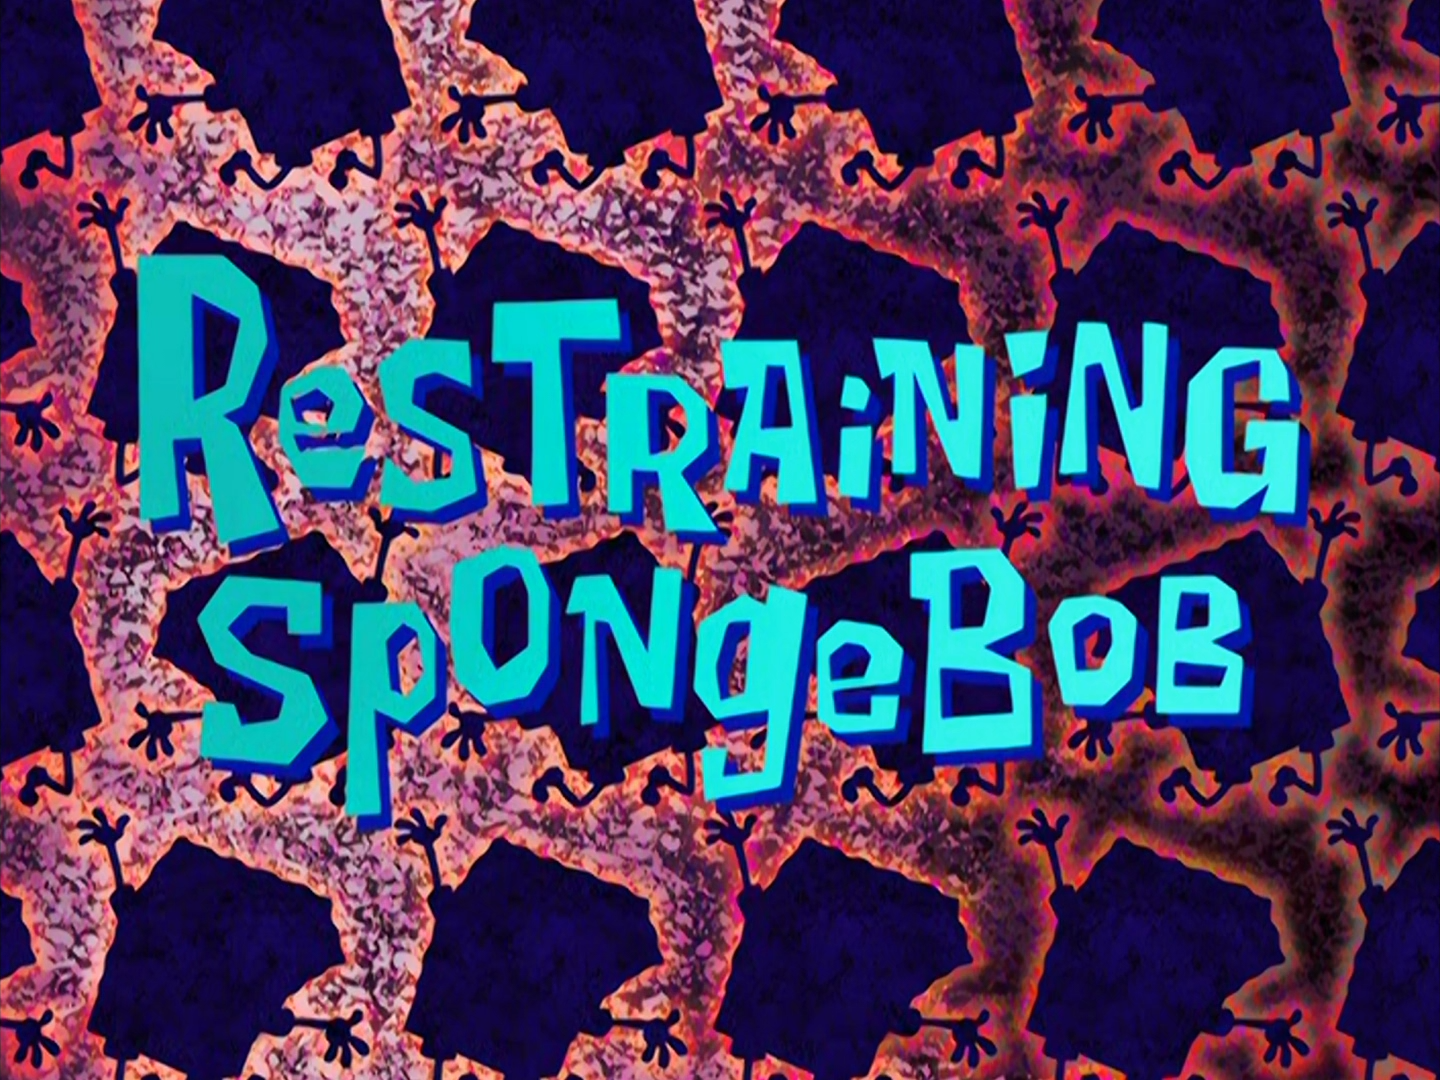 Sad Sack Shanty, Encyclopedia SpongeBobia